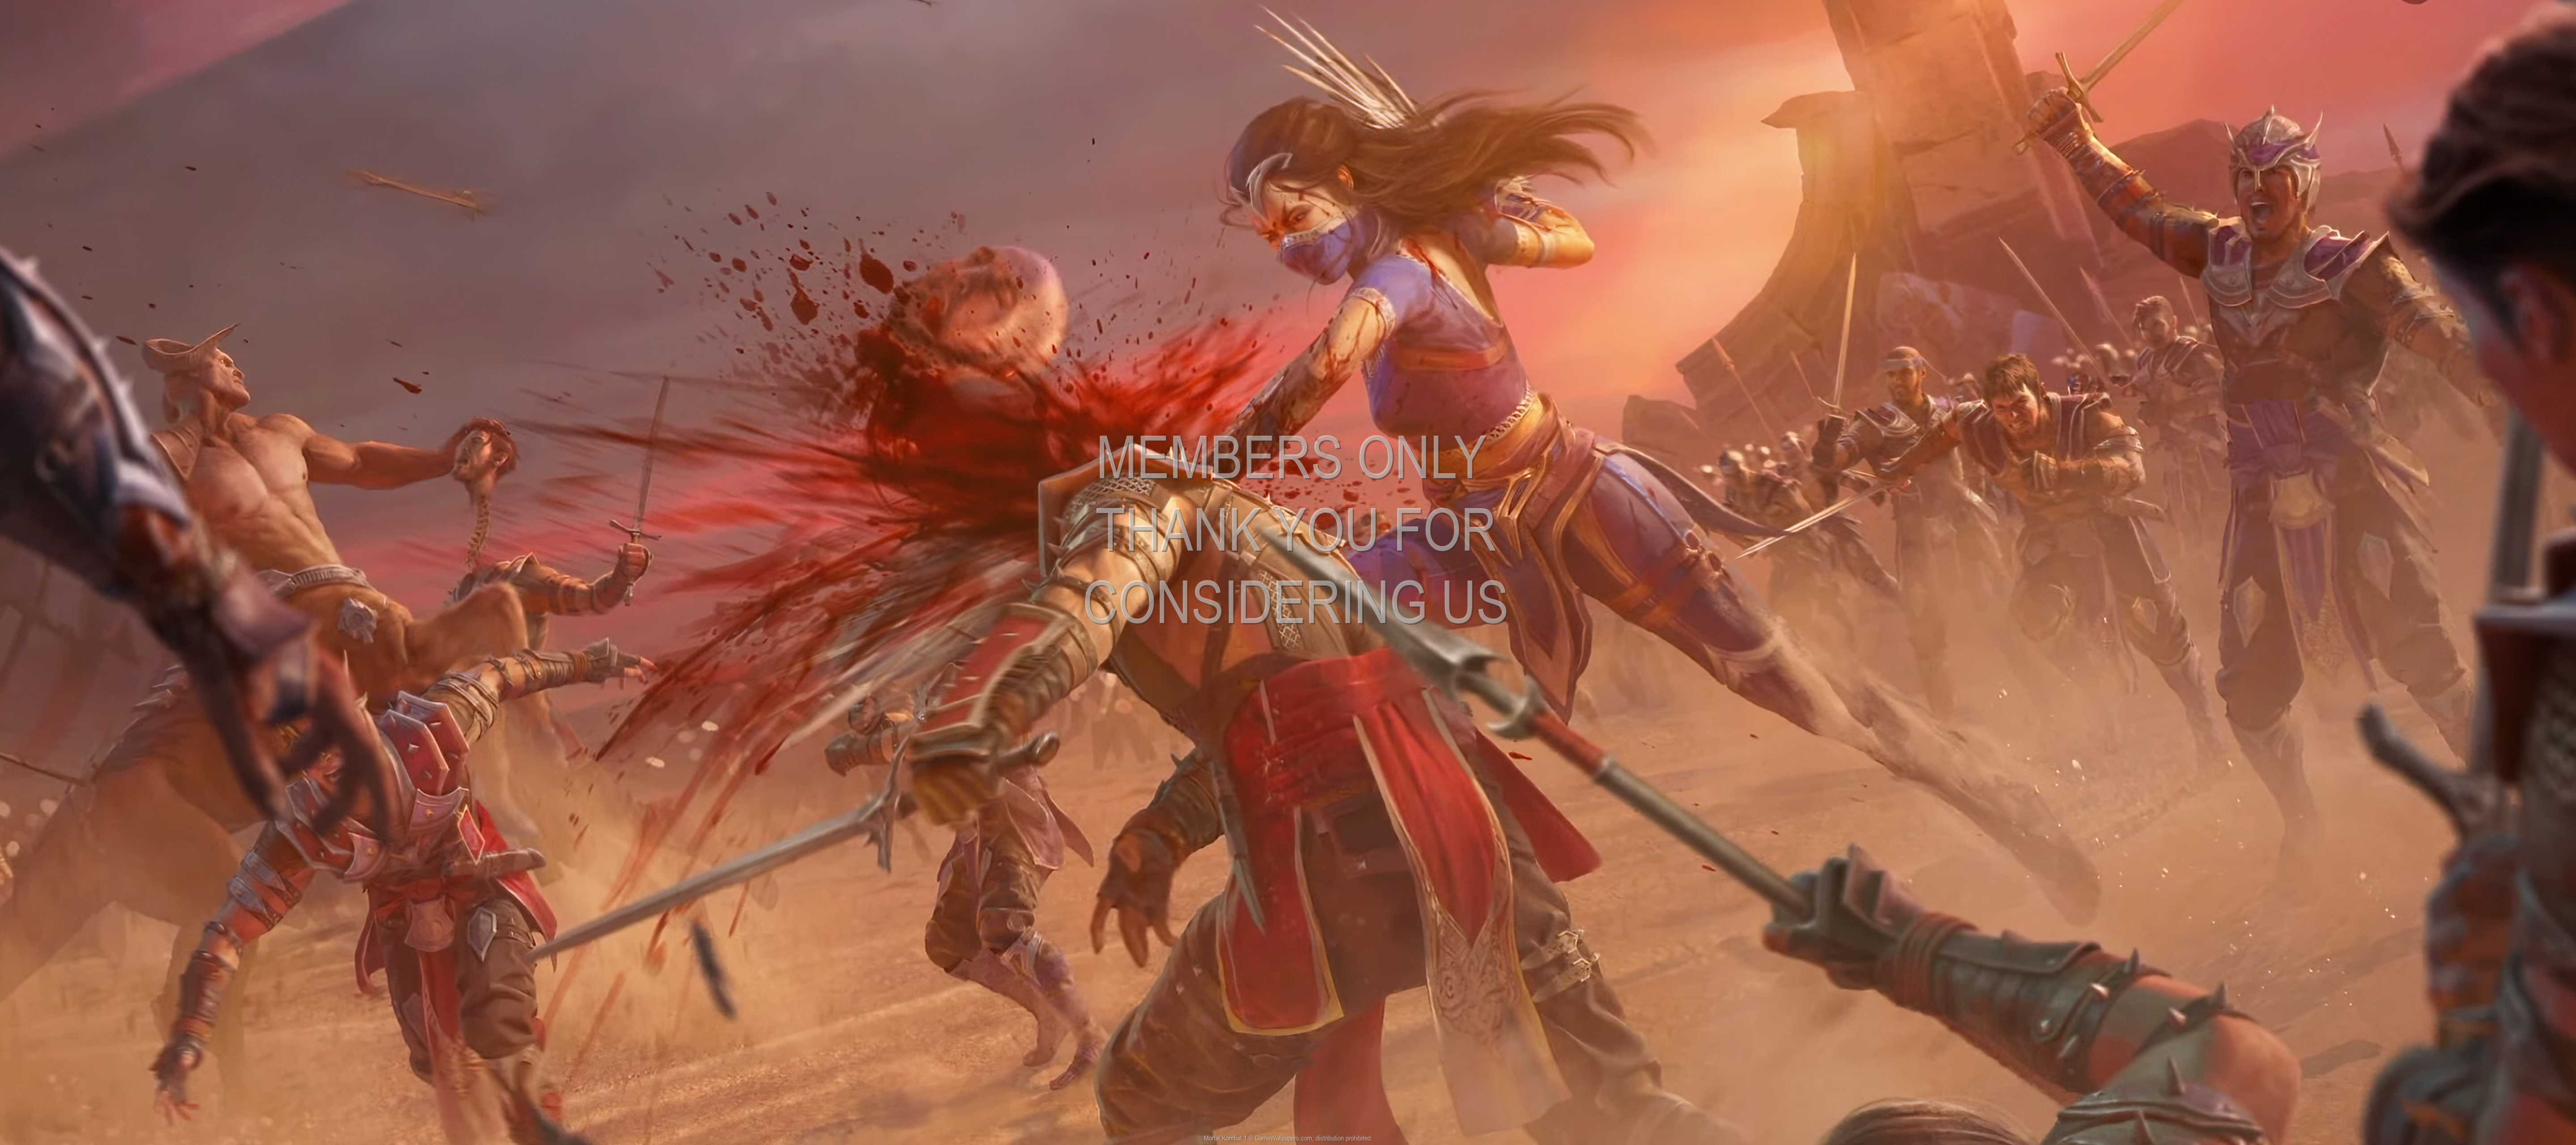 Mortal Kombat 1 1440p%20Horizontal Mobile wallpaper or background 08